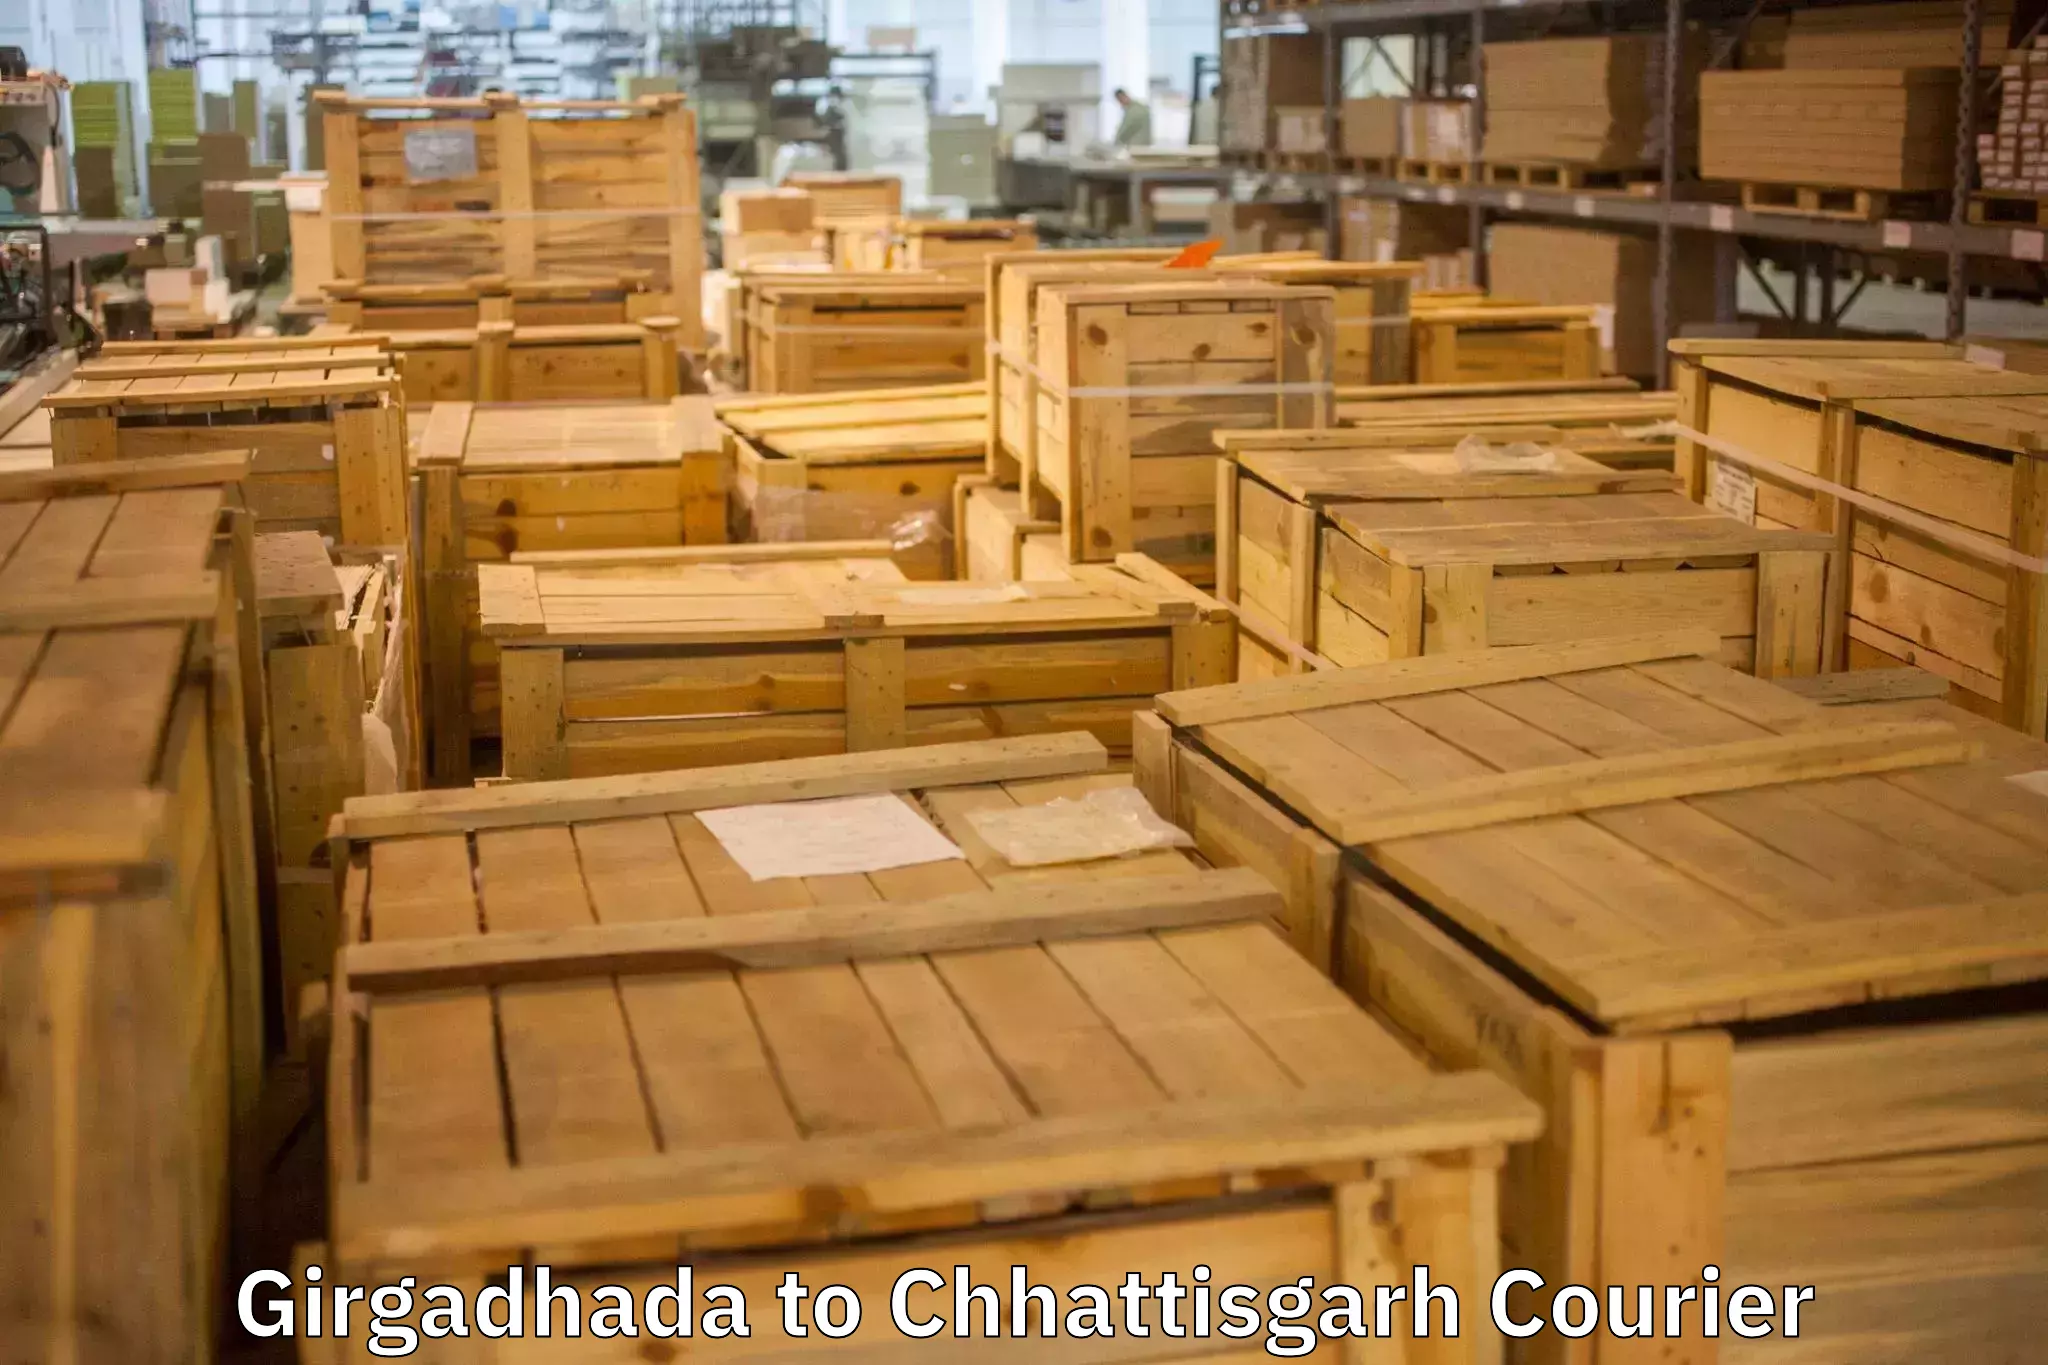 Quality moving and storage Girgadhada to IIT Bhilai